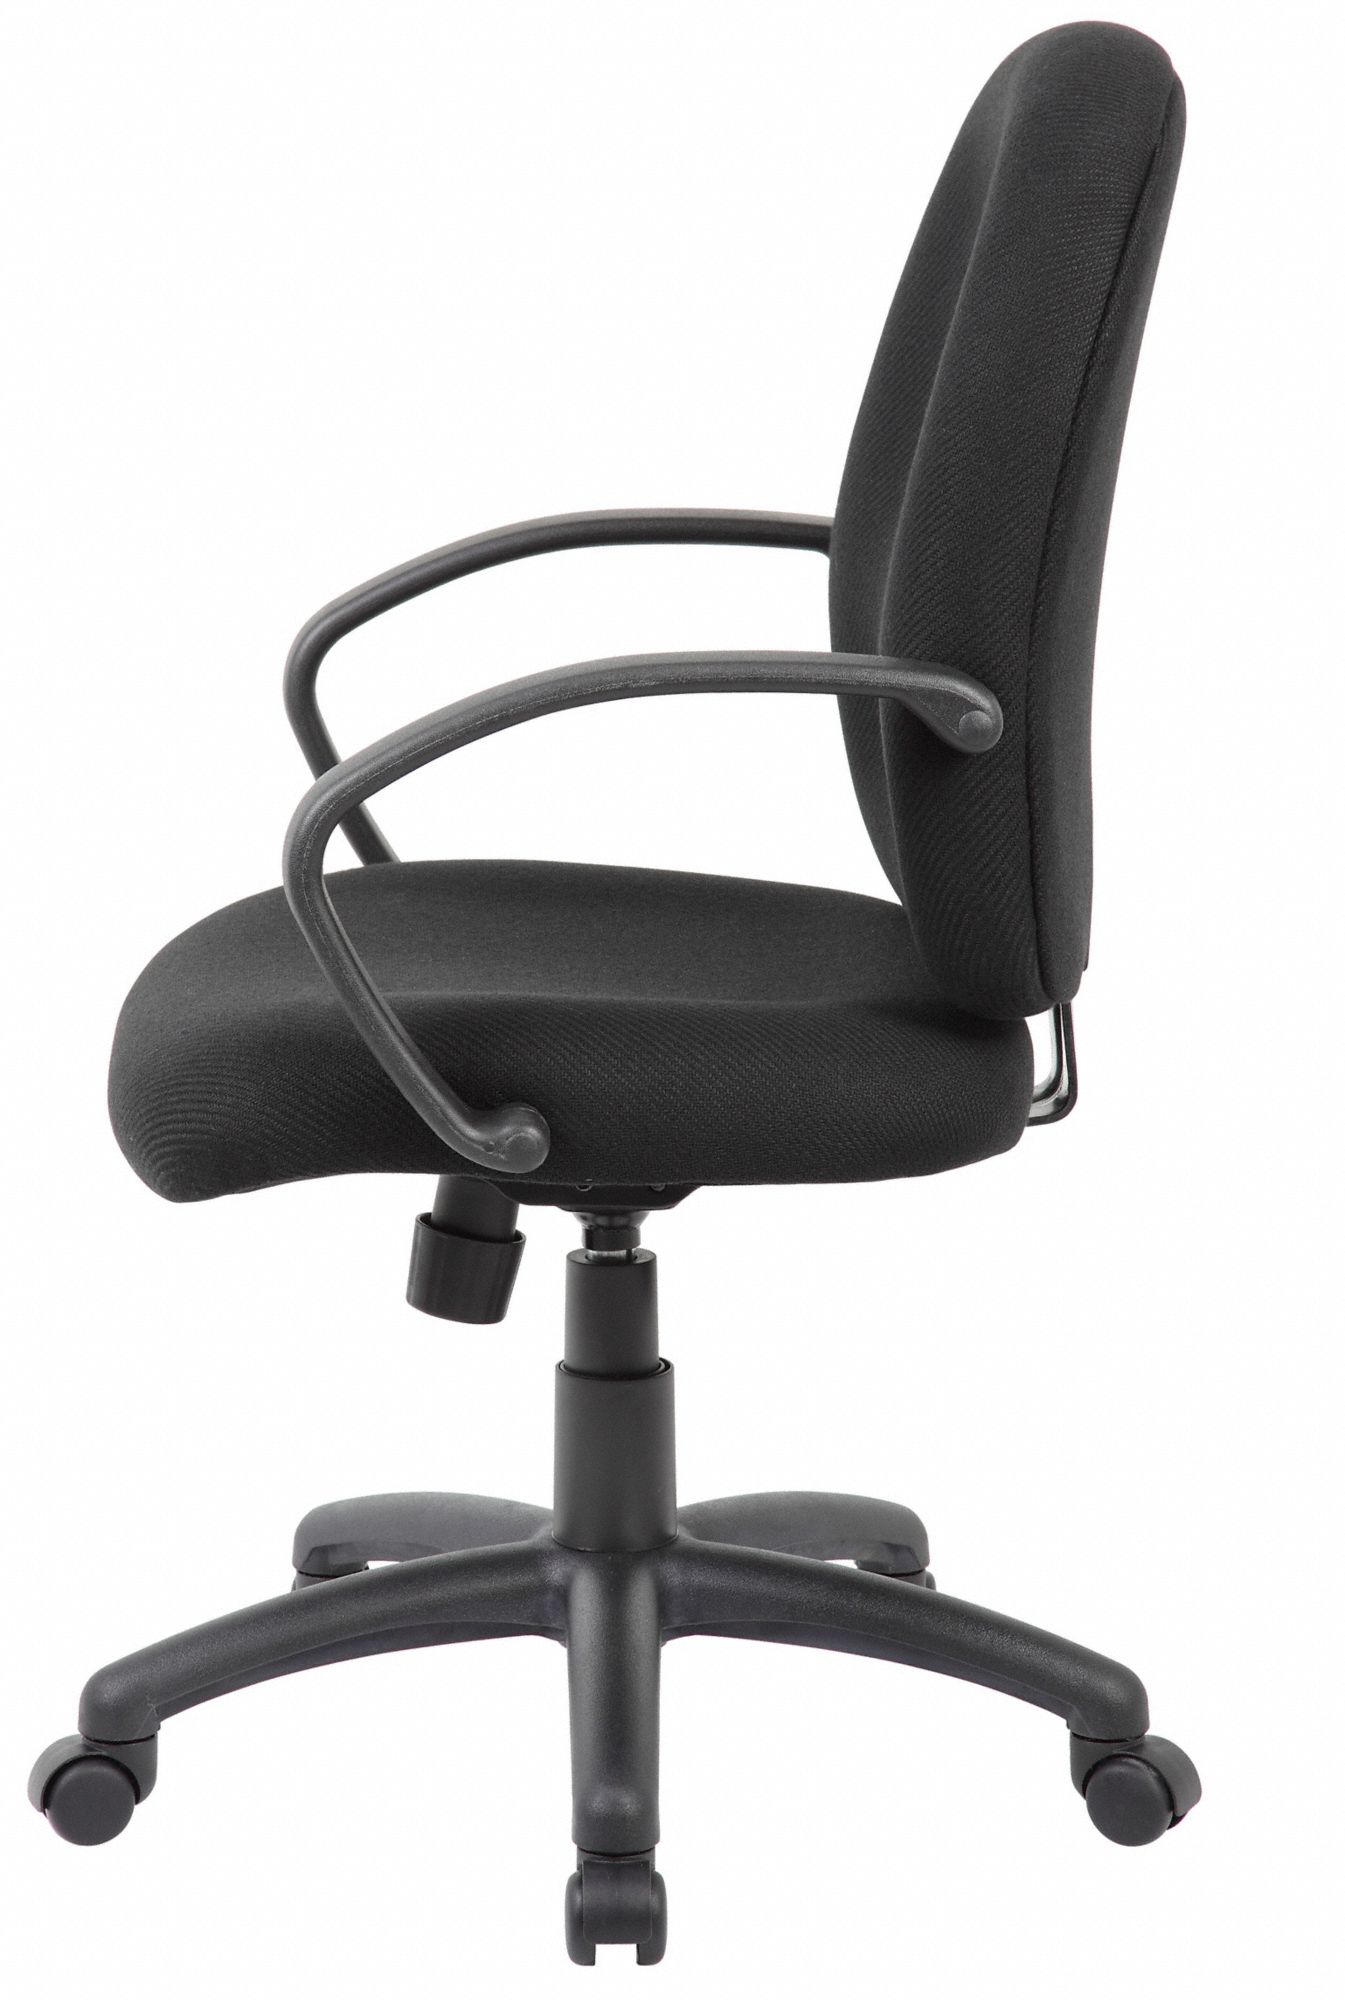 Boss Task Chair Task Chair Black Fabric 18 In To 21 In Nominal Seat Height Range 423l84 B500 Bk Grainger